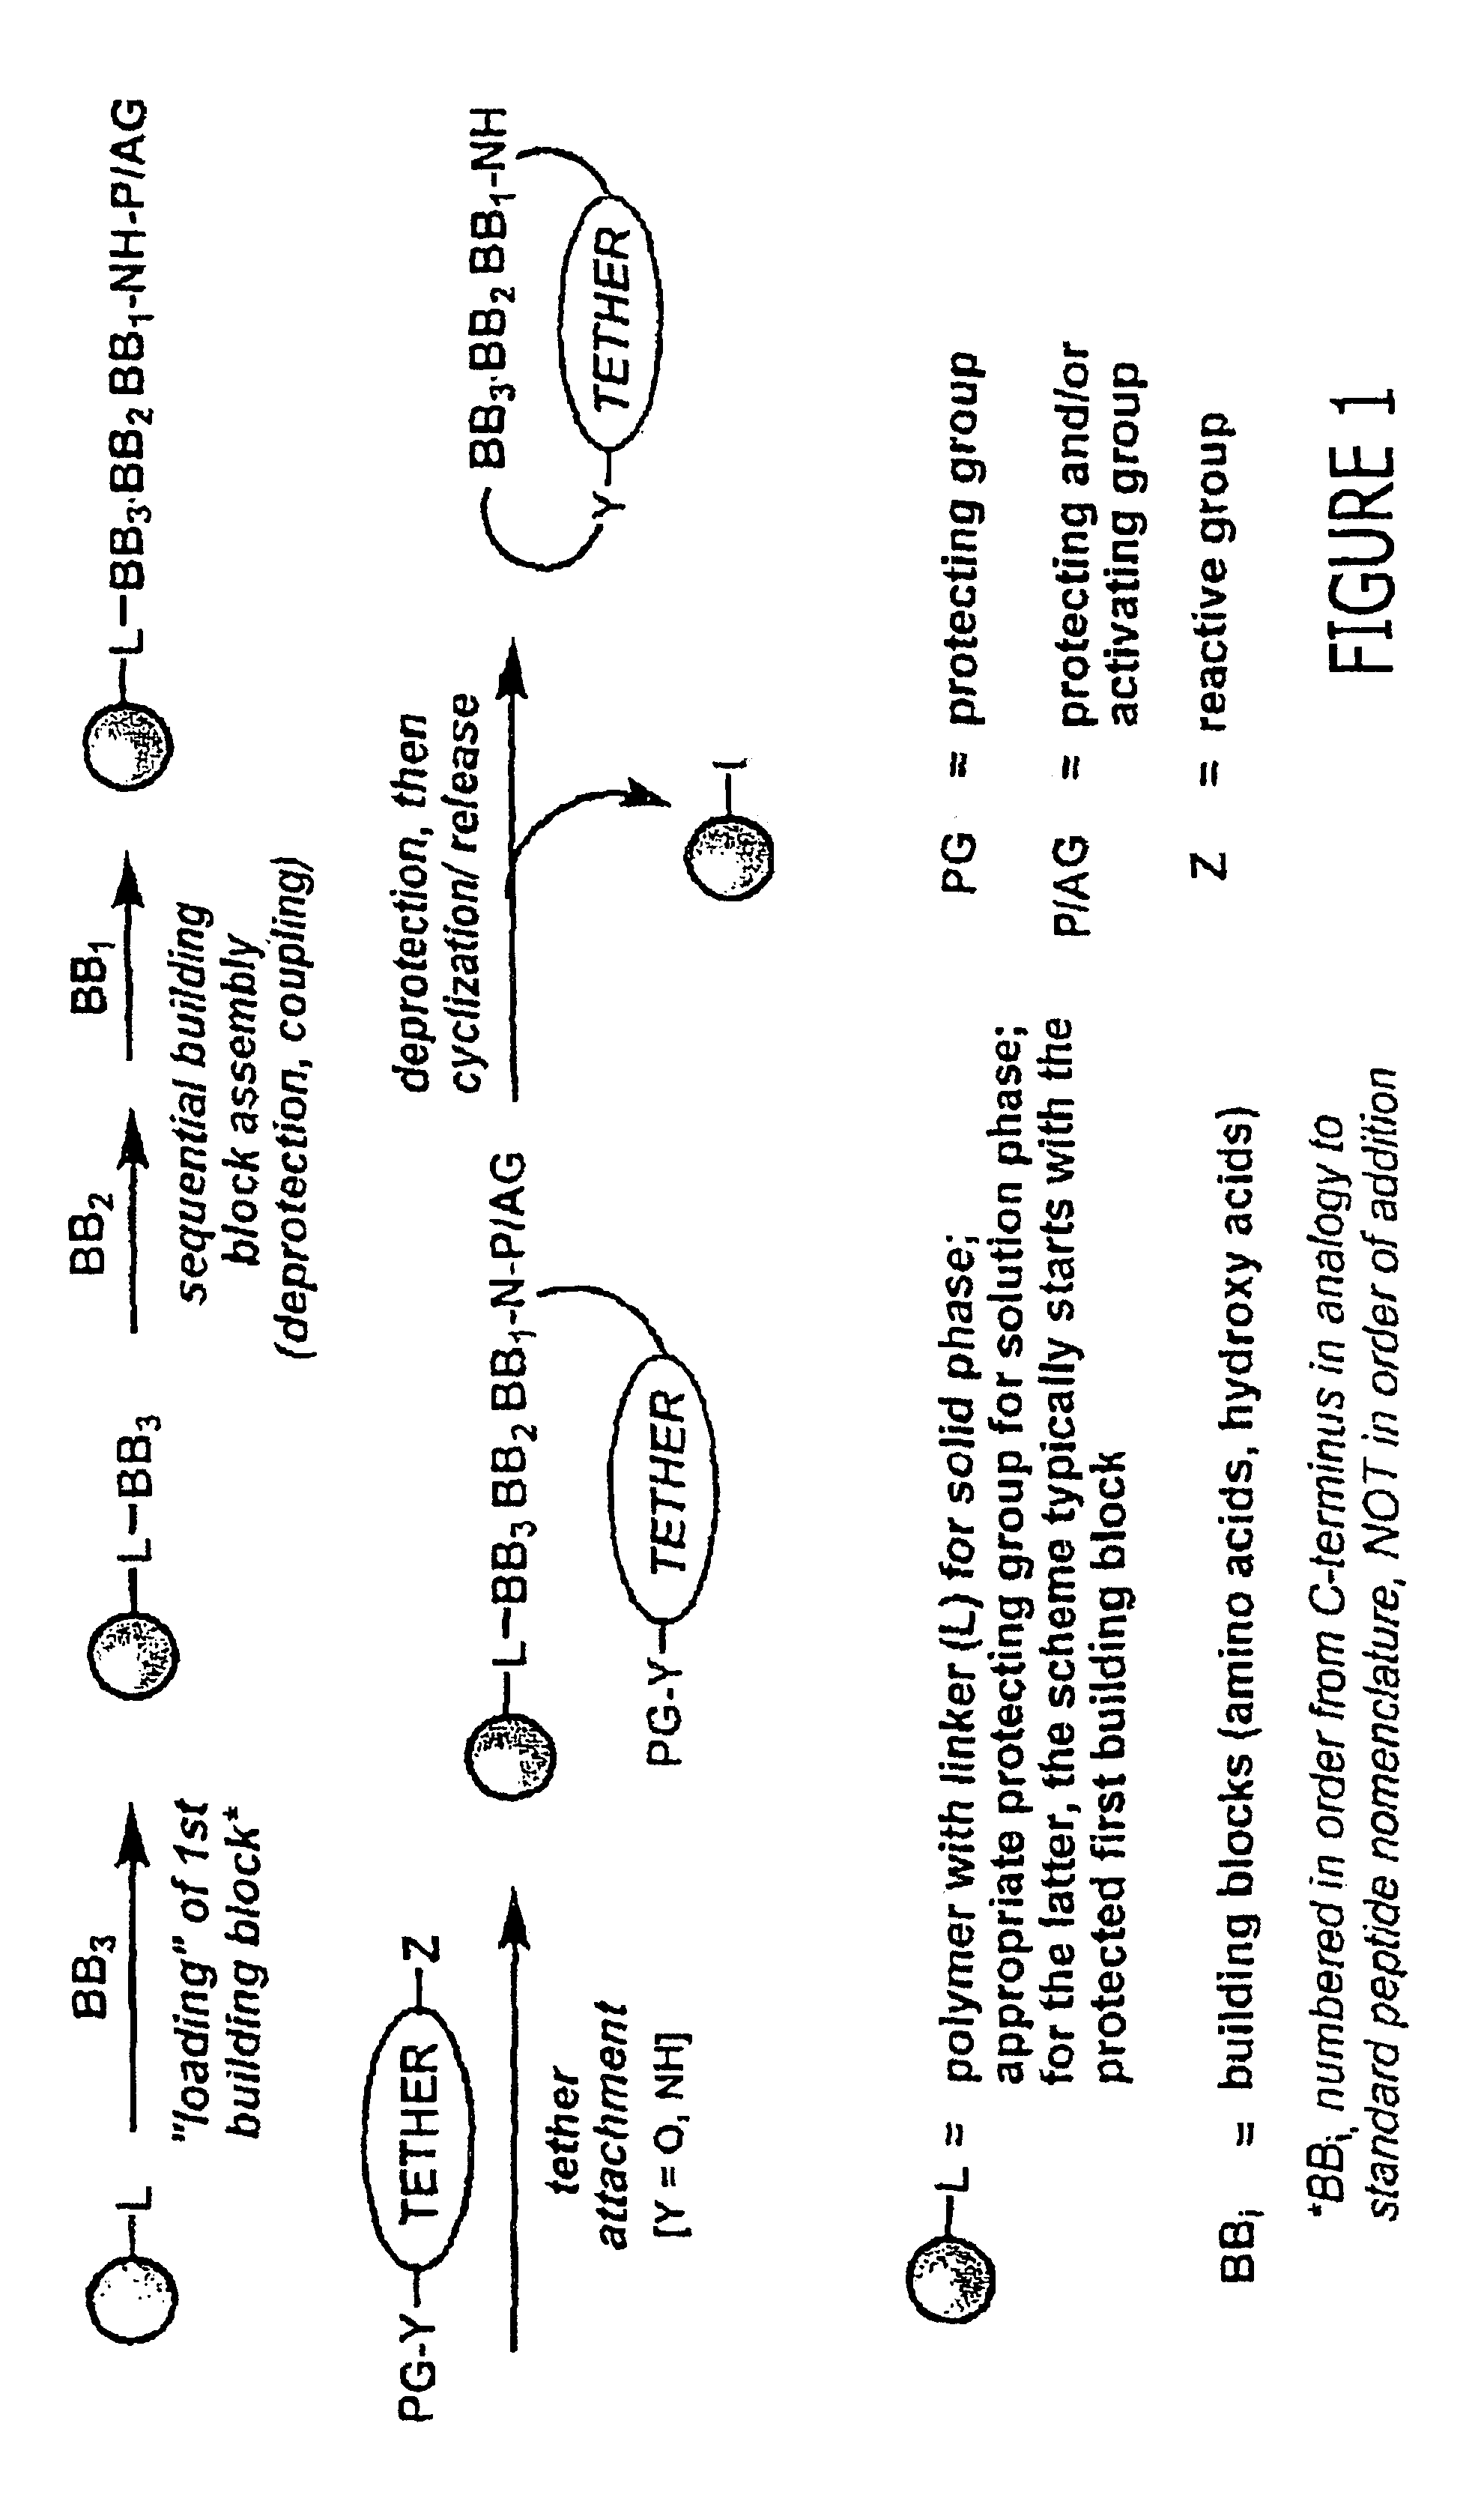 Macrocyclic modulators of the ghrelin receptor